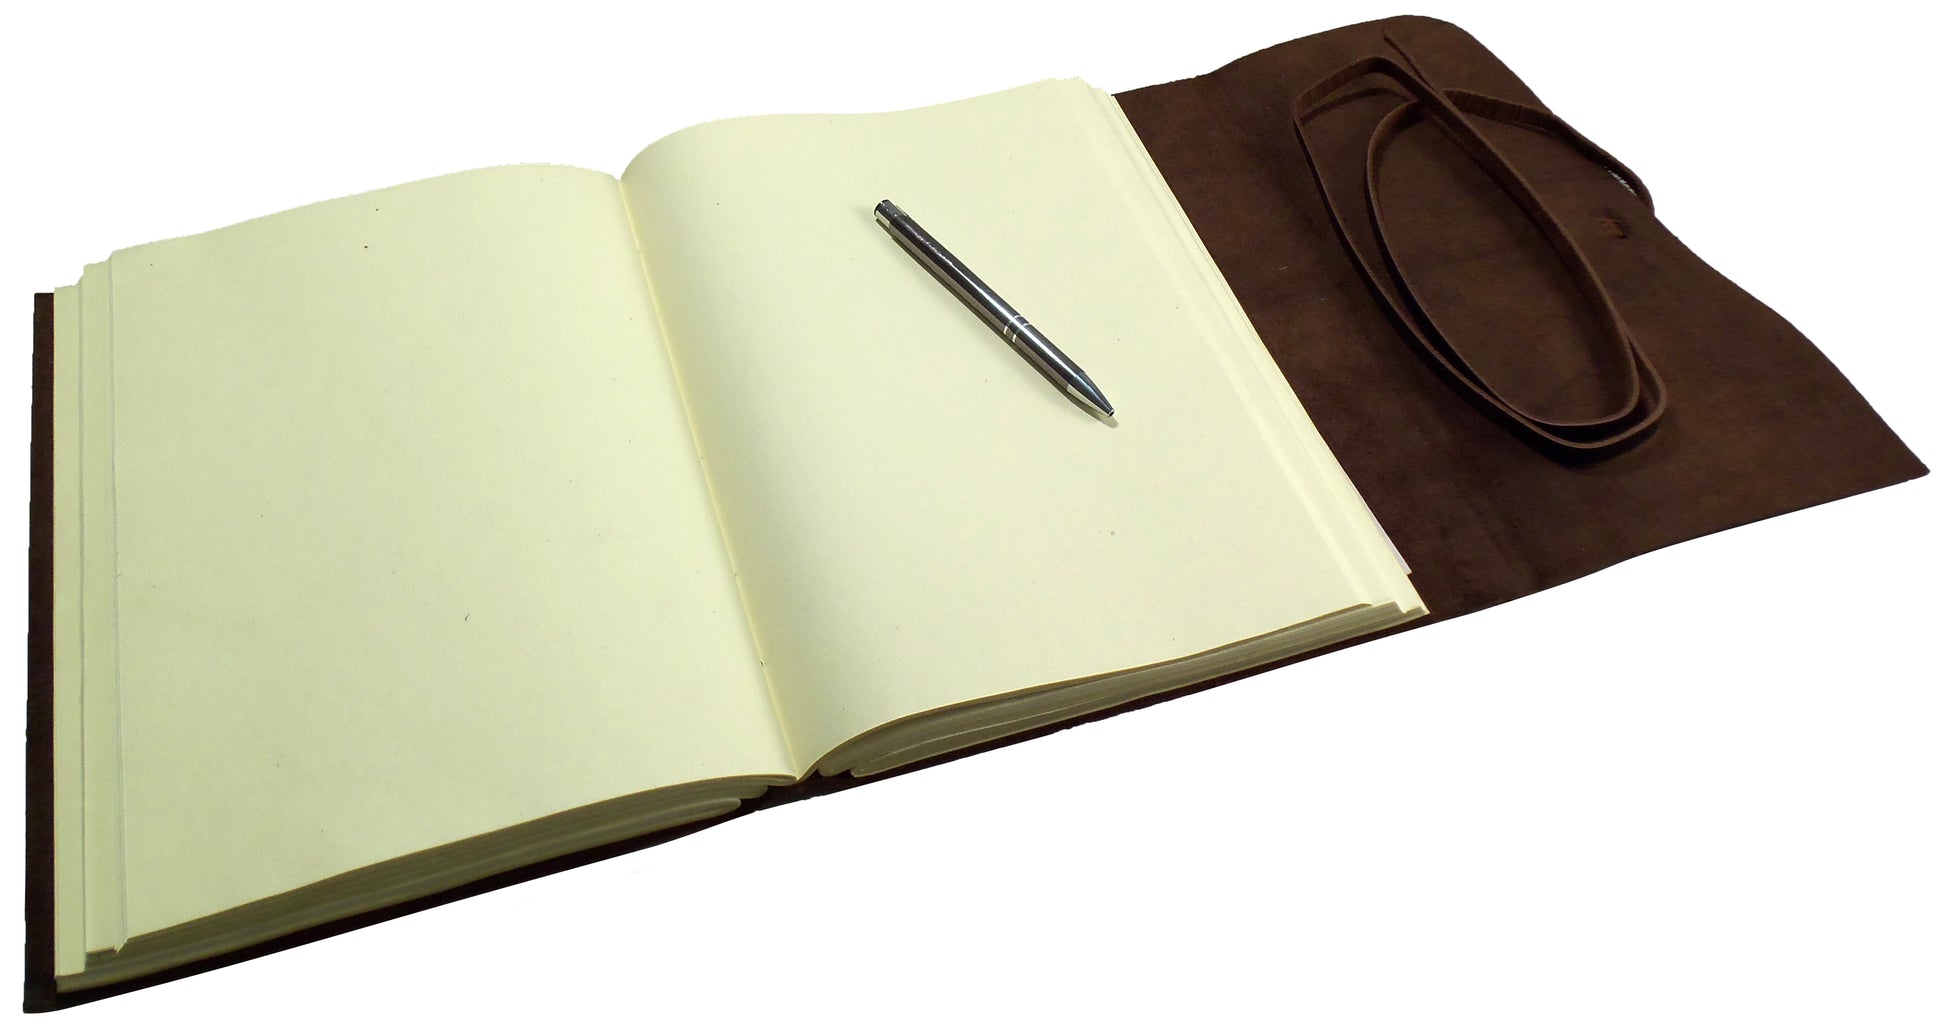 Rustico Leather Sketch Book - Dark Brown - 8.5 x 11 - Heartwood